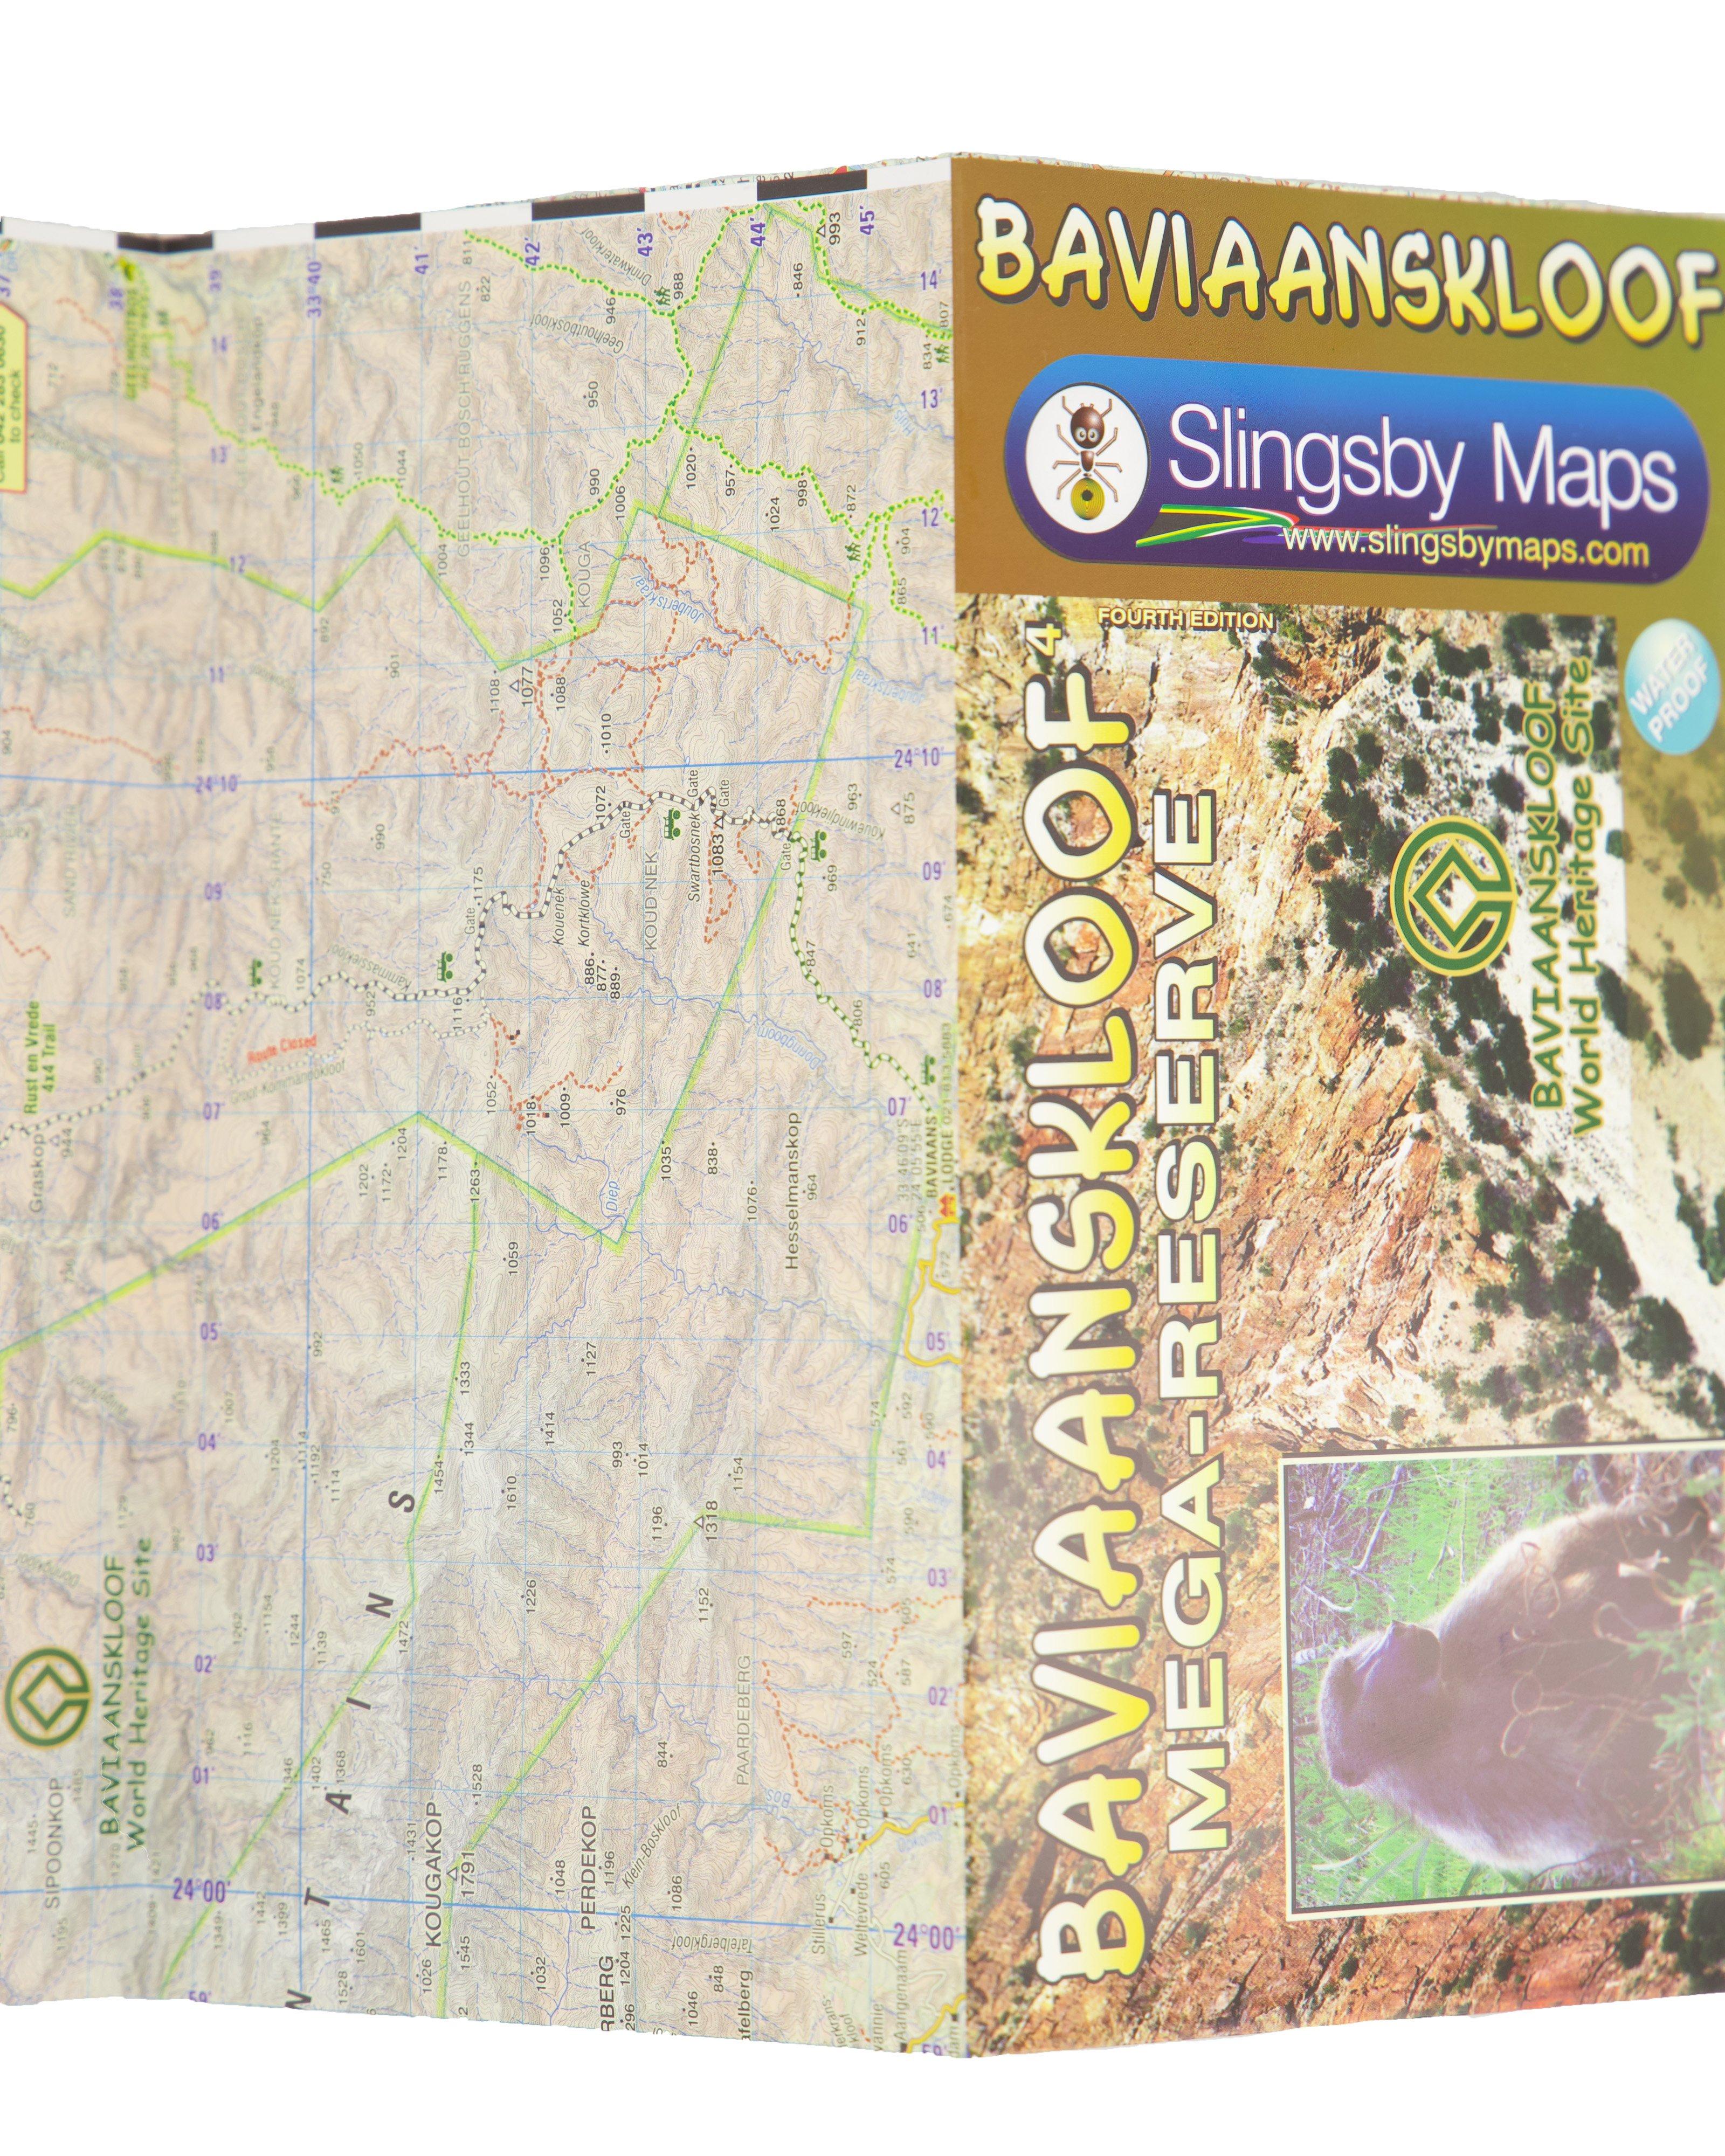 Baviaanskloof #4 Map -  No Colour